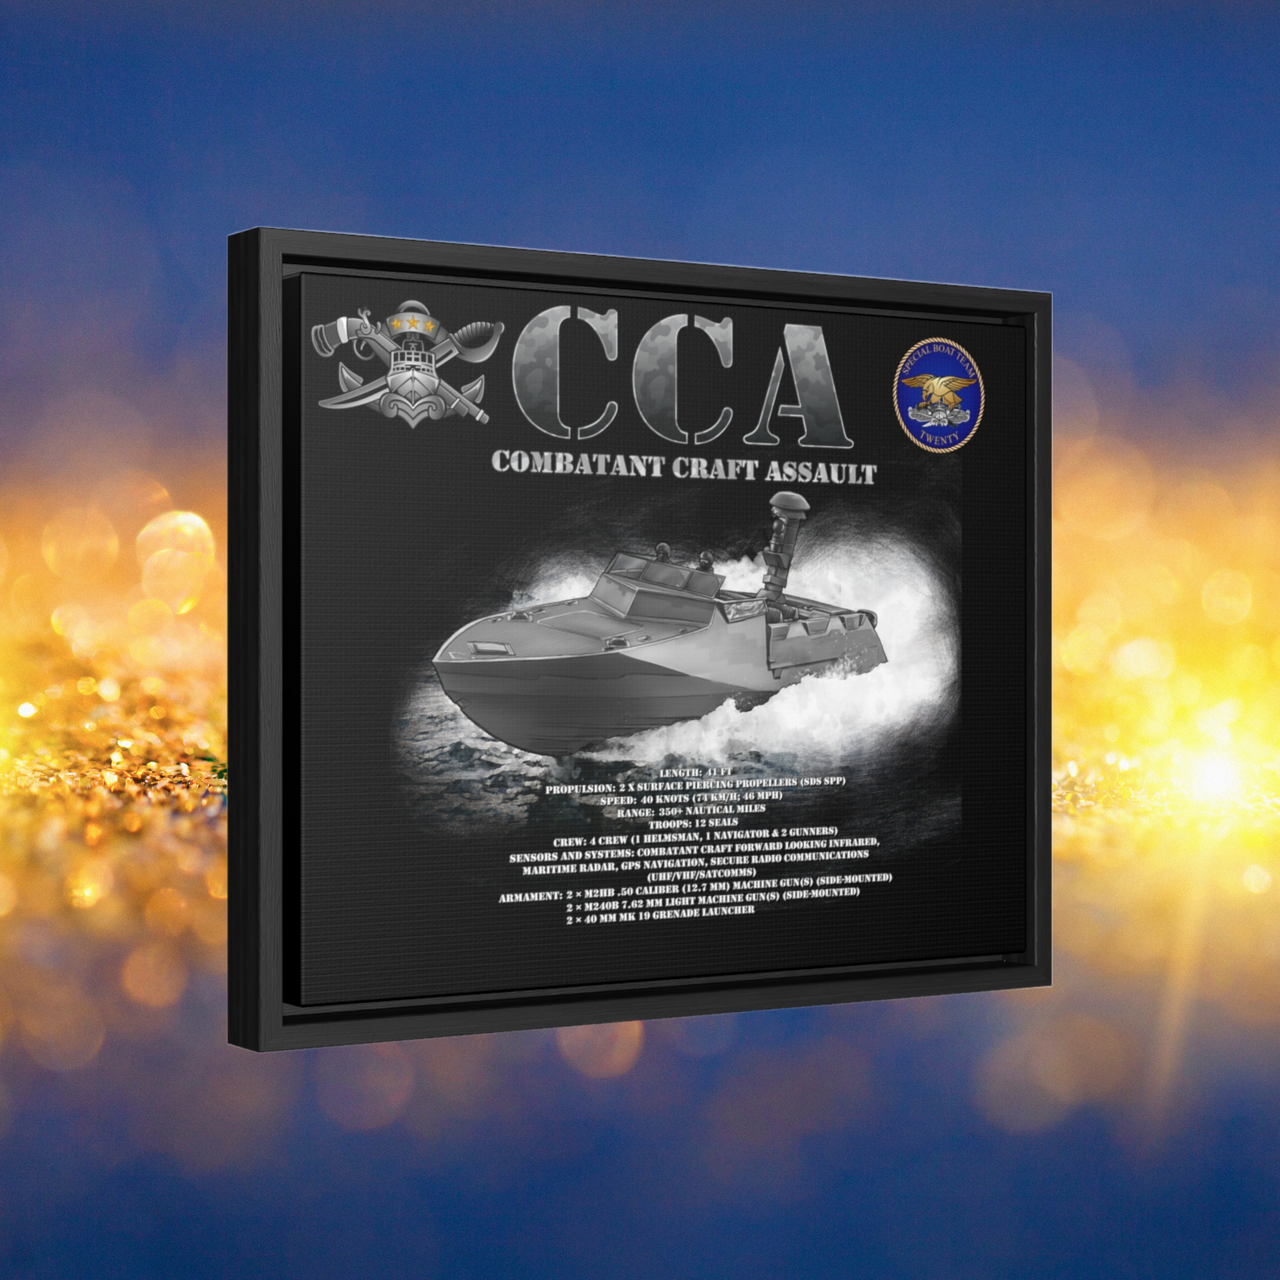 Combatant Craft Assault, CCA, Special Boat Team 20, SBT 20